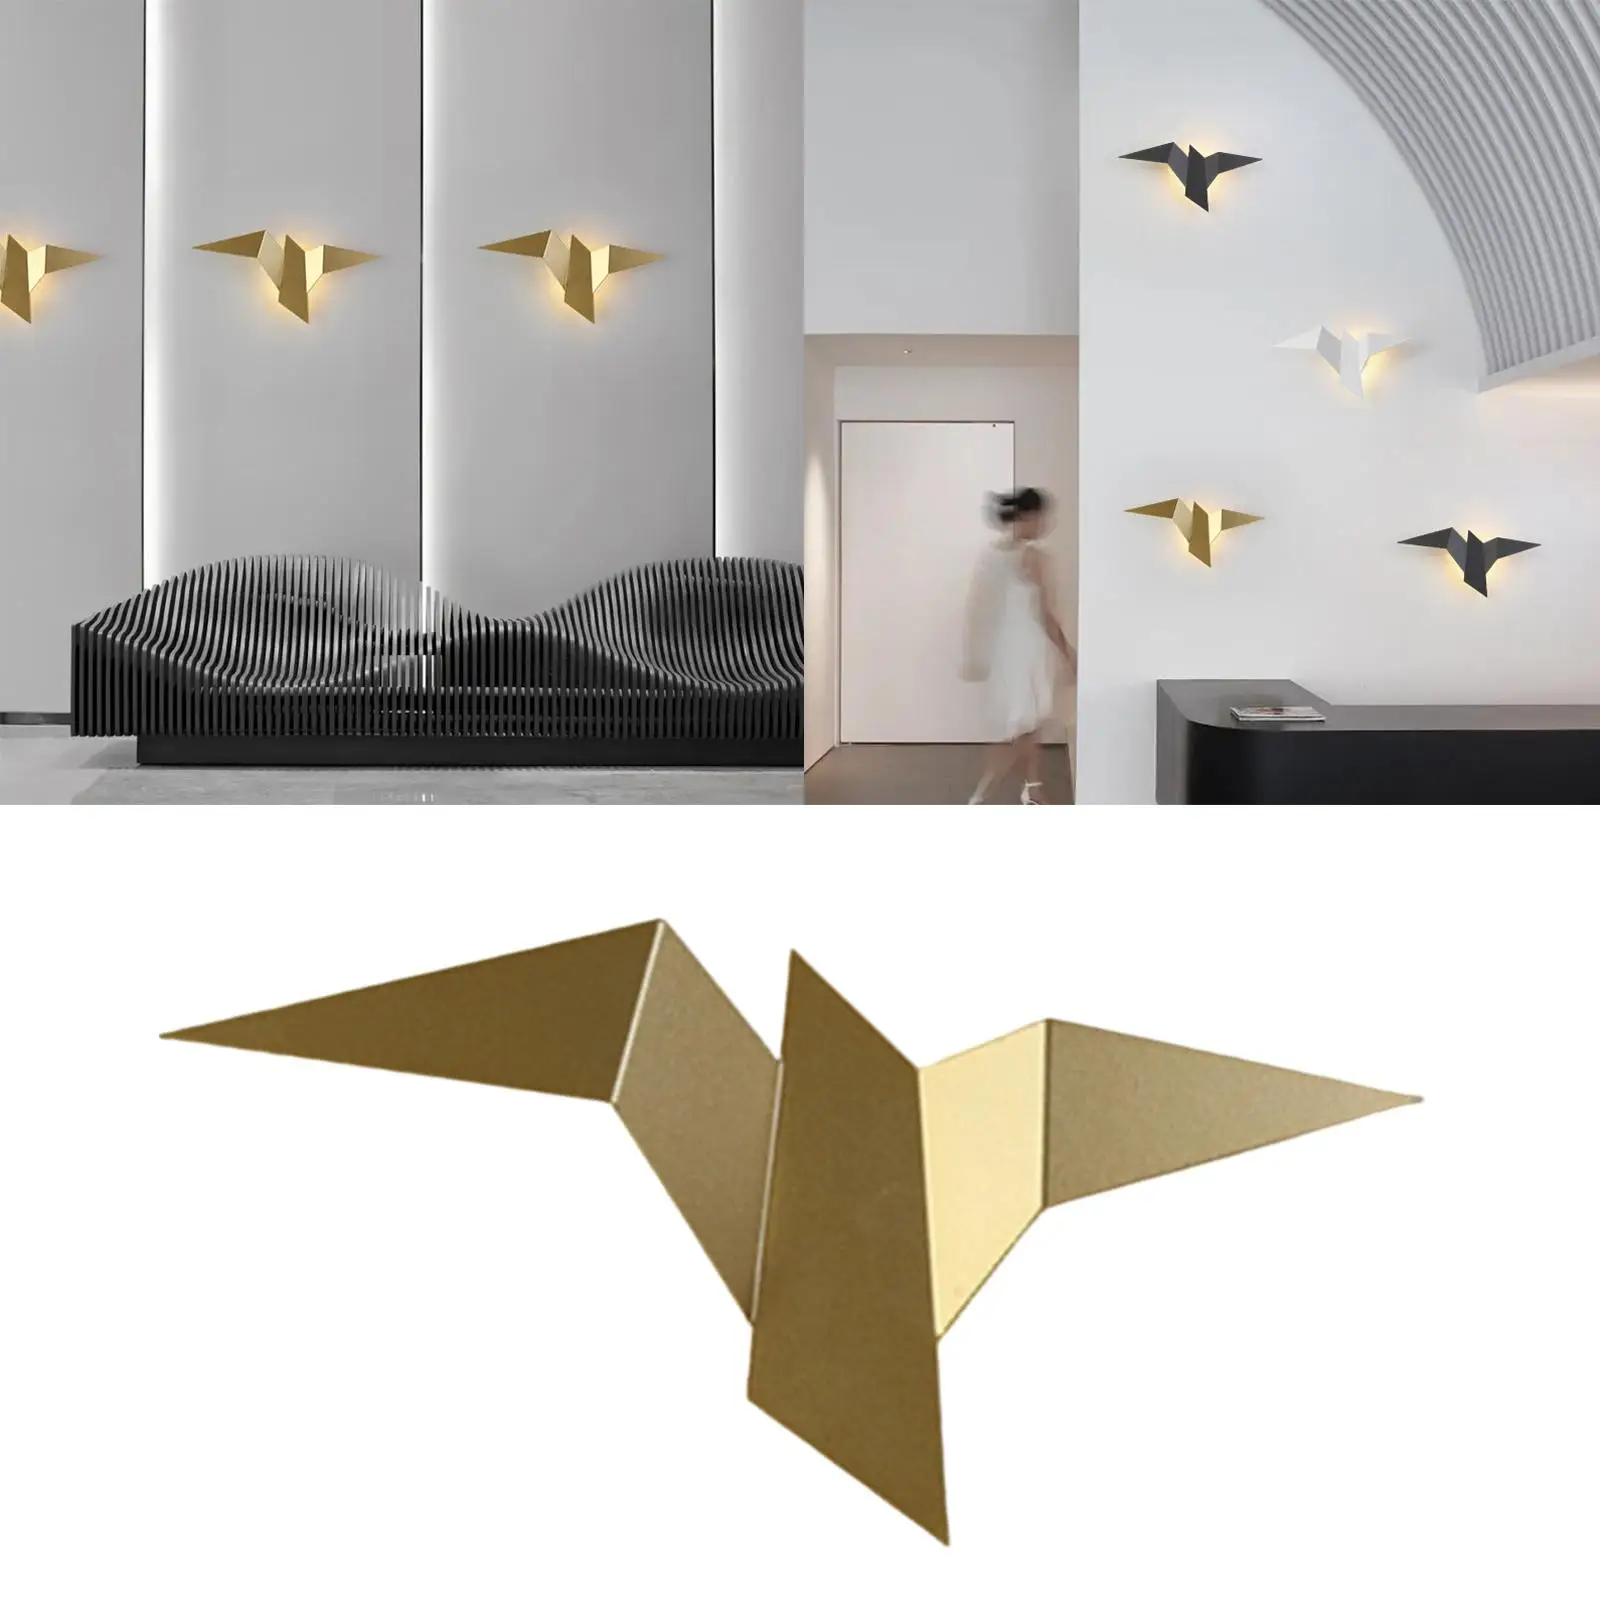 LED Flying Bird Wall Lamp Wall Light Lighting Fixtures for Bedroom Decor